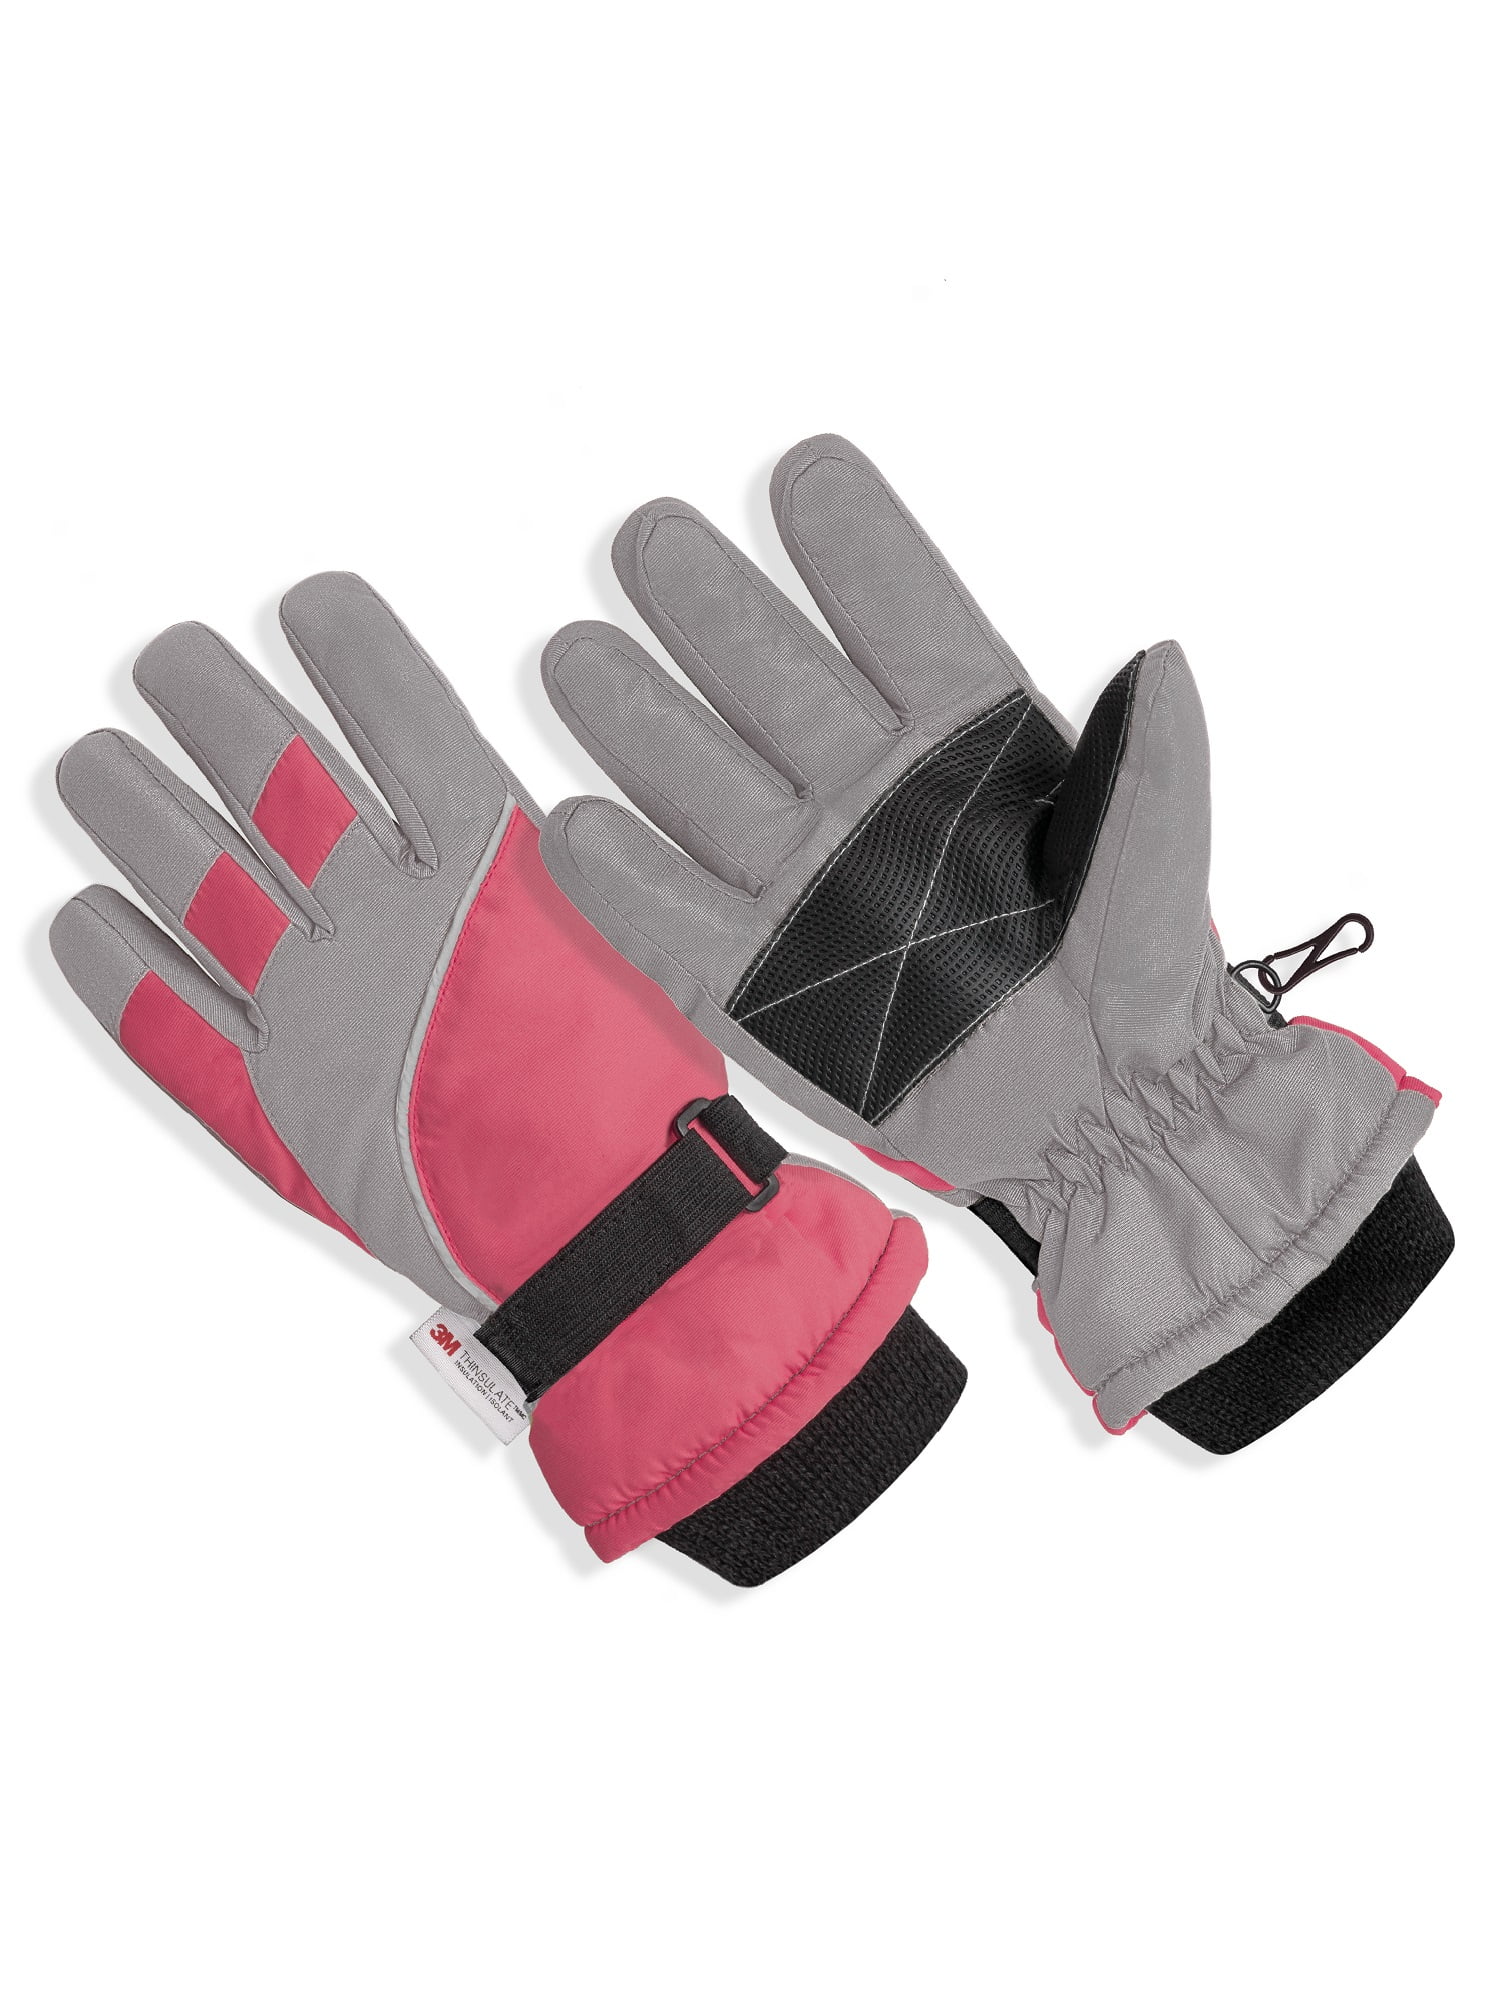 underholdning ost skjule SK1010, Girls Premium Ski Gloves with Reflective Strip, Anti-Slip Grip,  Thinsulate Lined, Water Repellent - Walmart.com